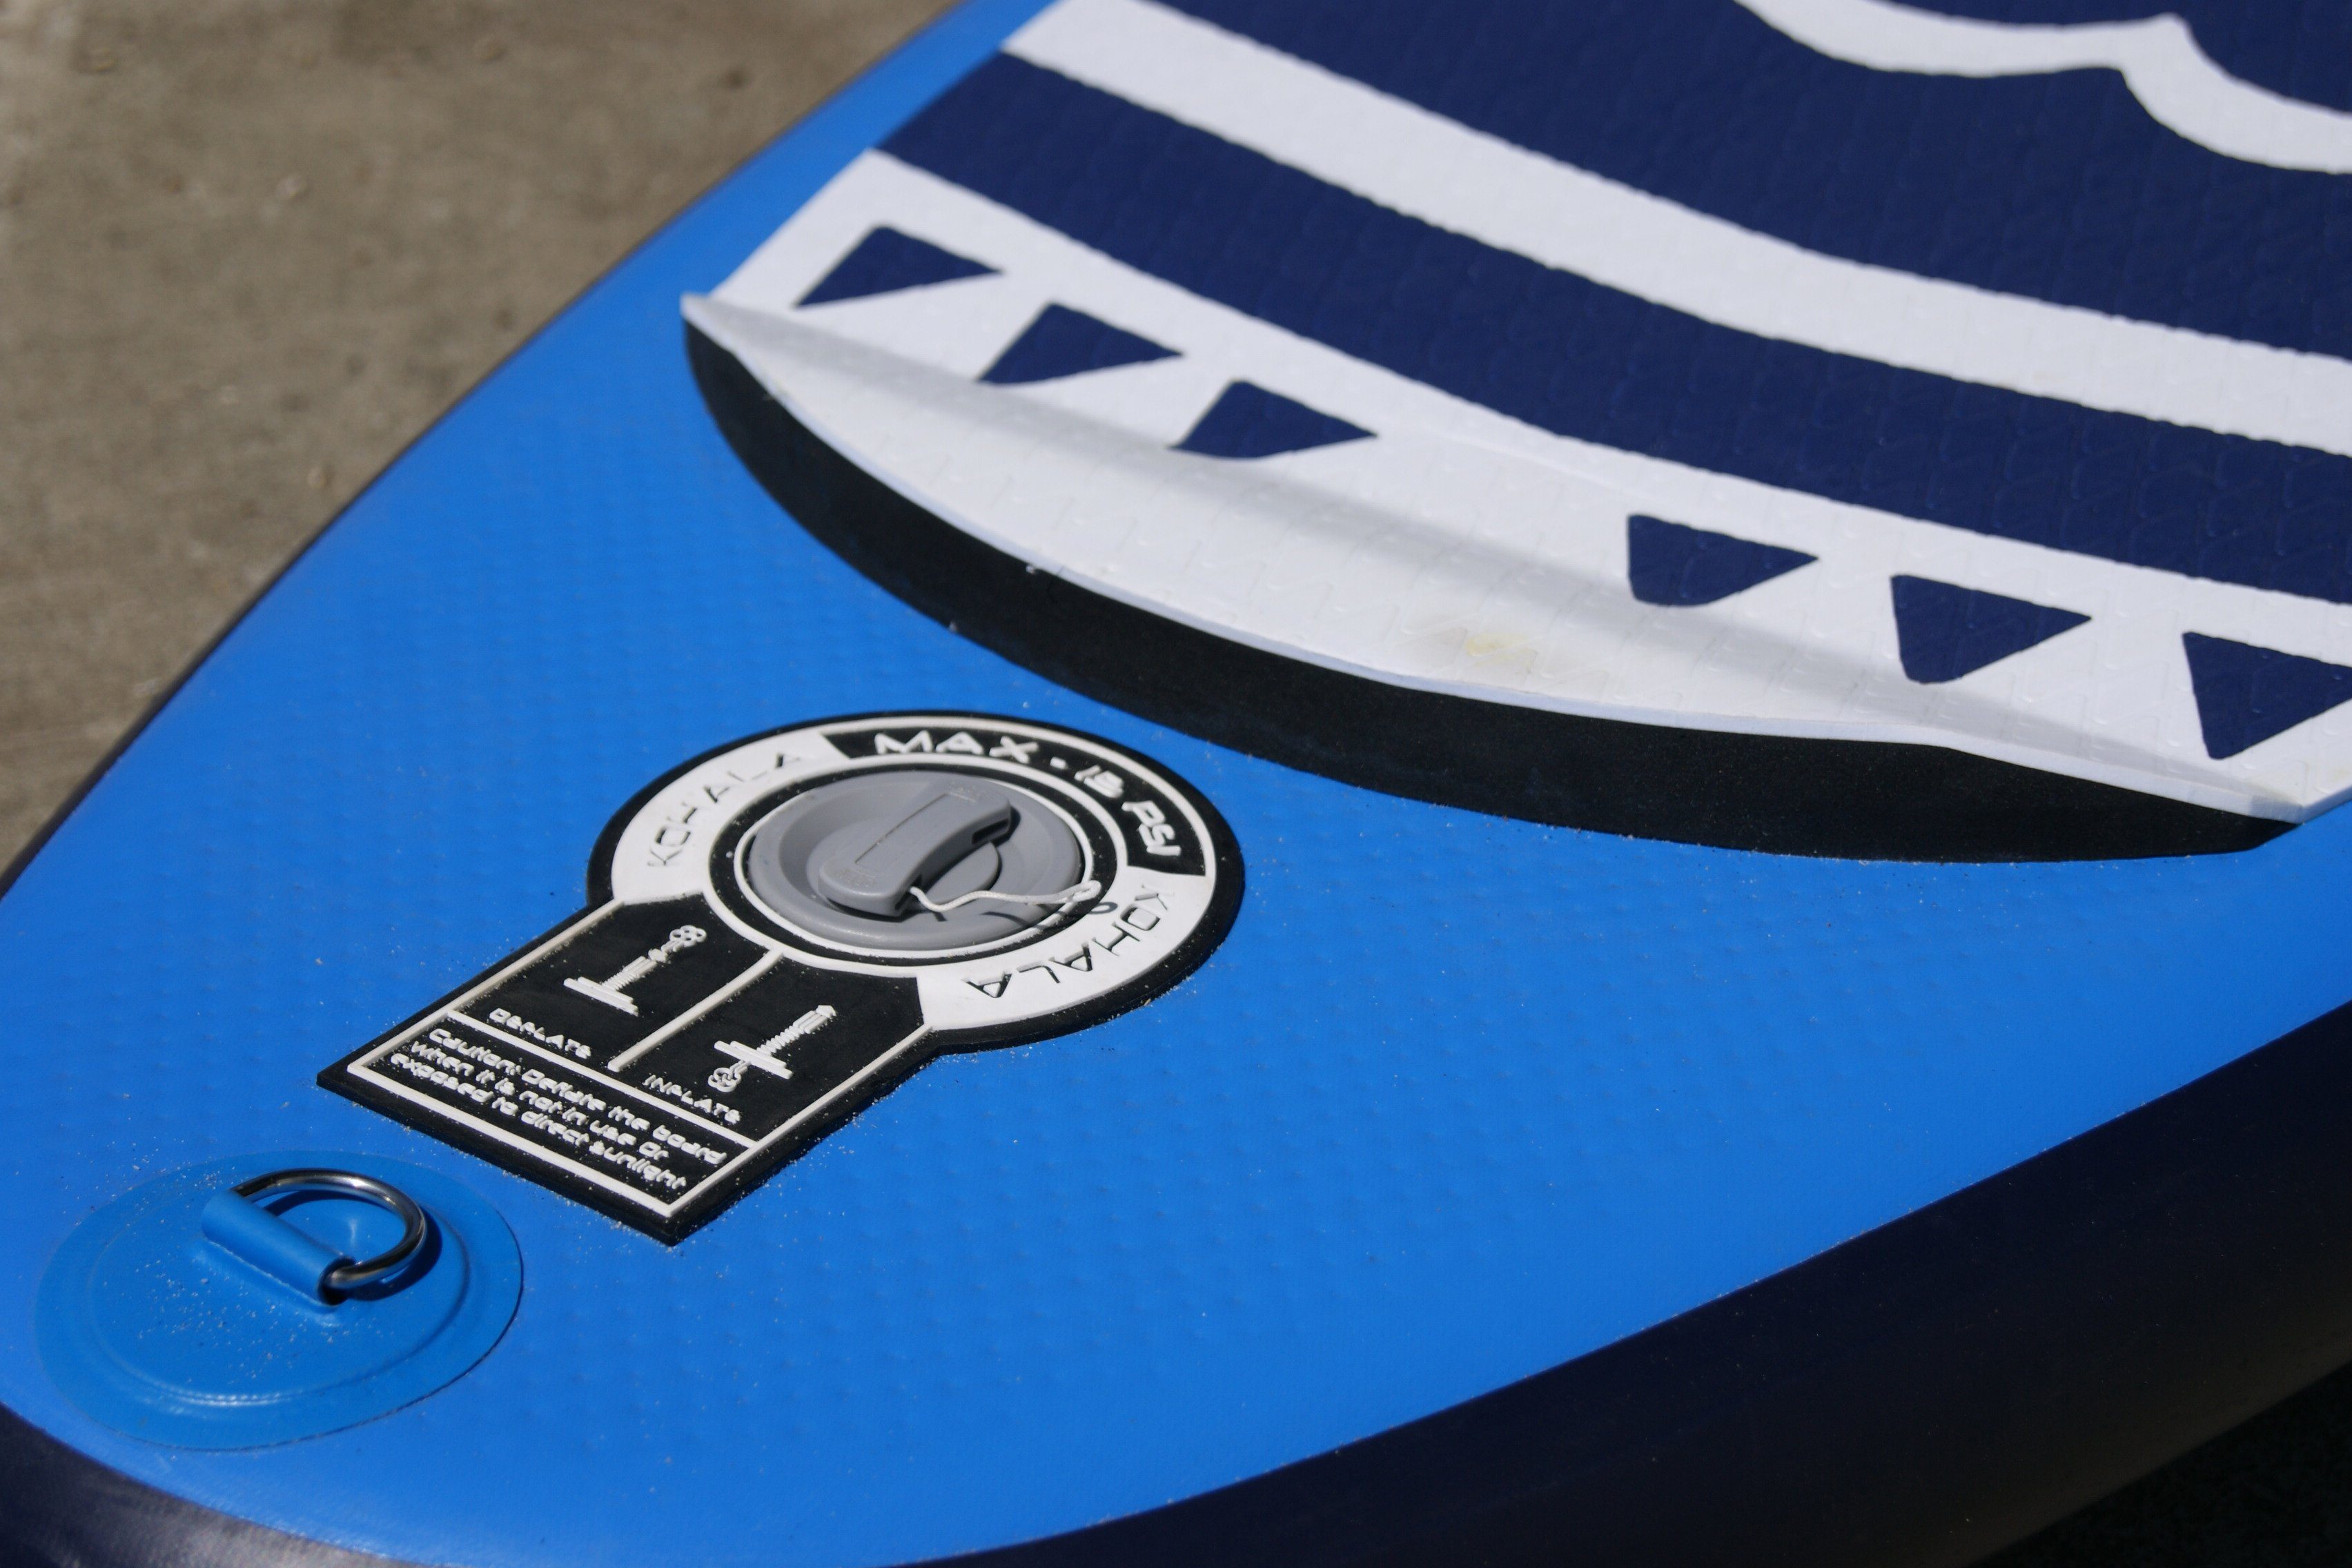 SUP-Board KOHALA Kohala, tlg) blau/weiss (6 Inflatable